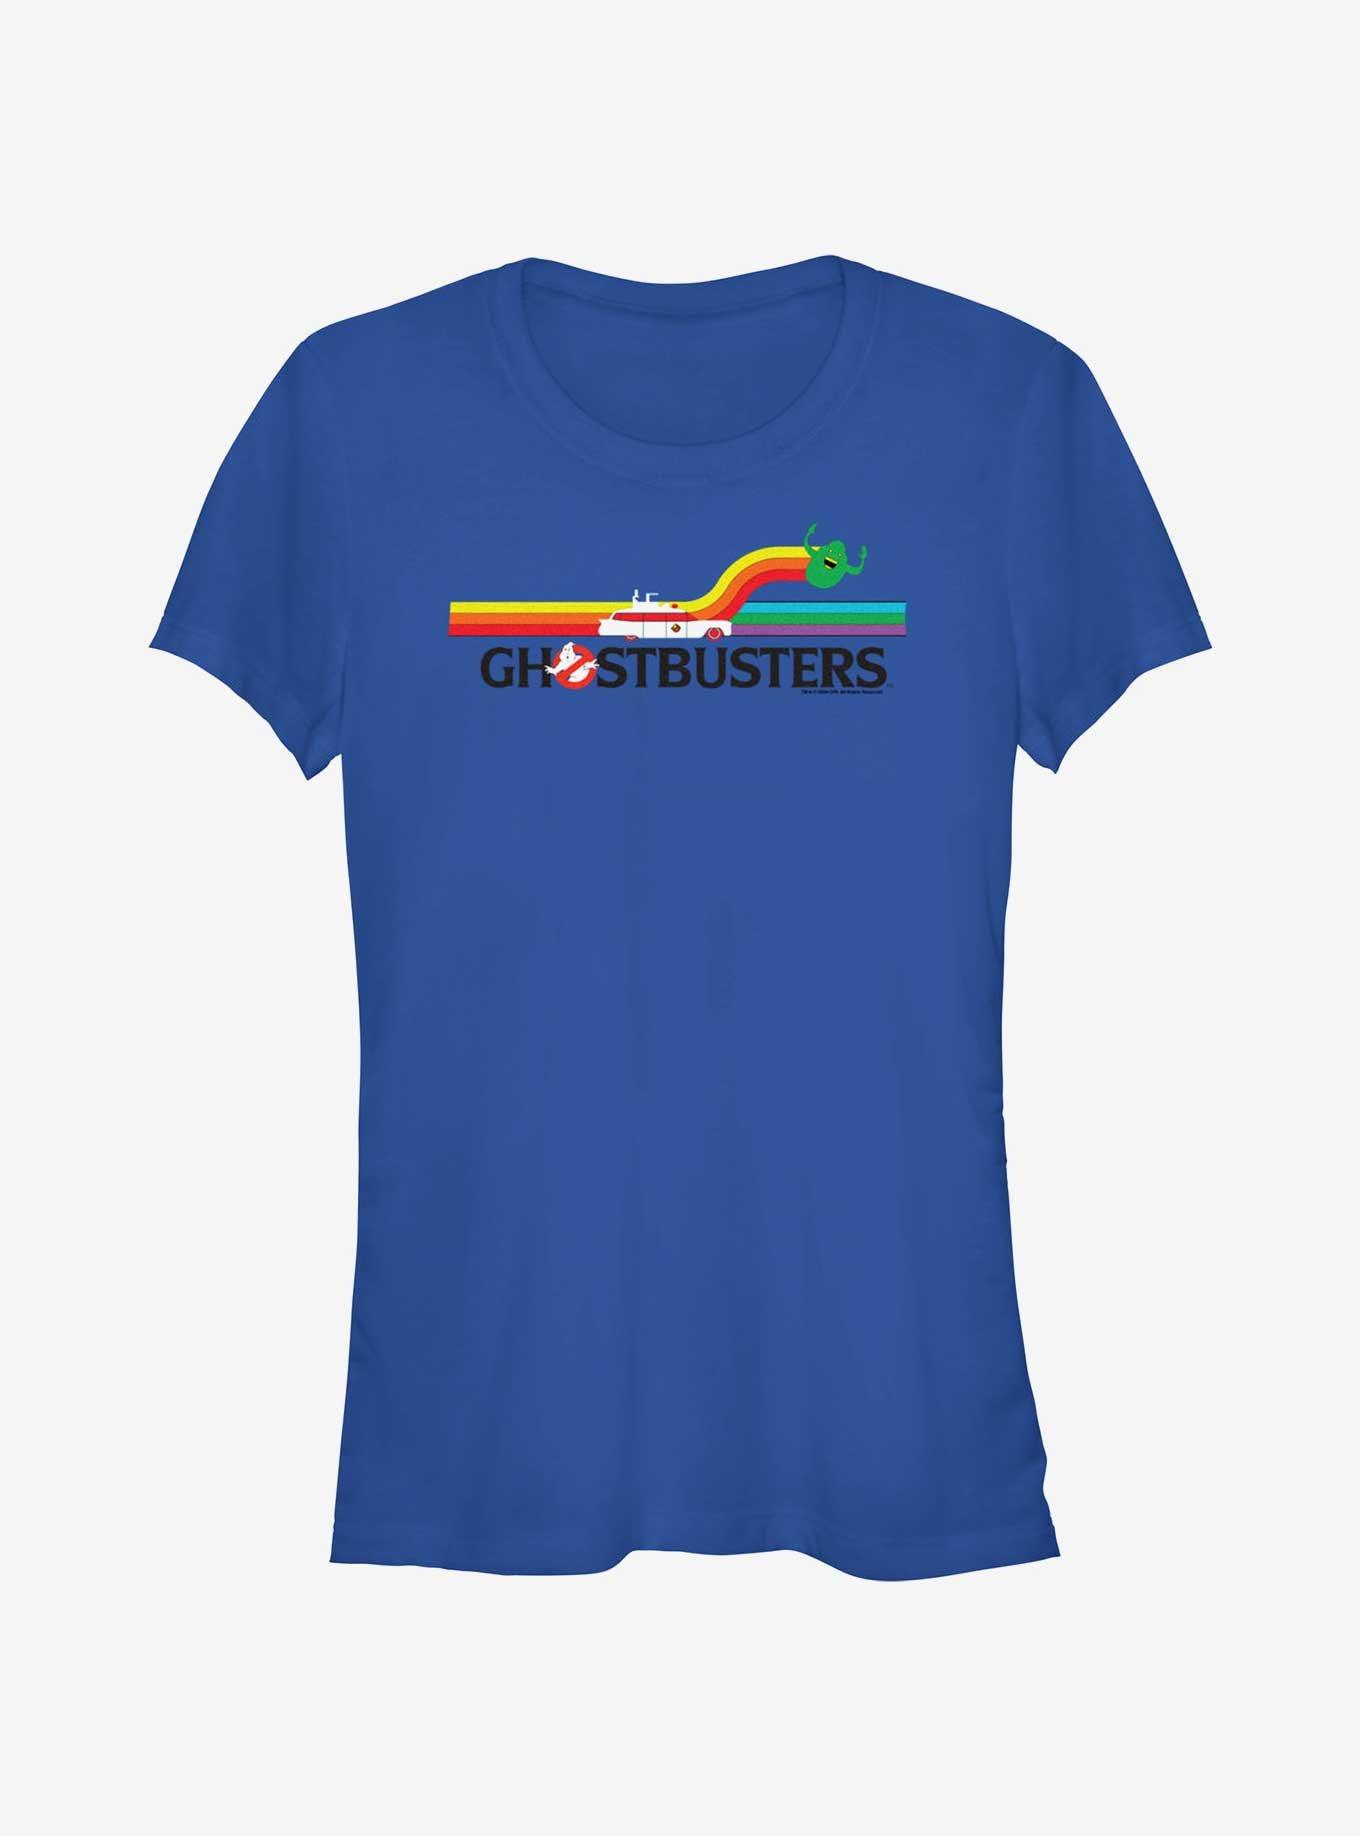 Ghostbusters: Frozen Empire Retro Road Girls T-Shirt, ROYAL, hi-res